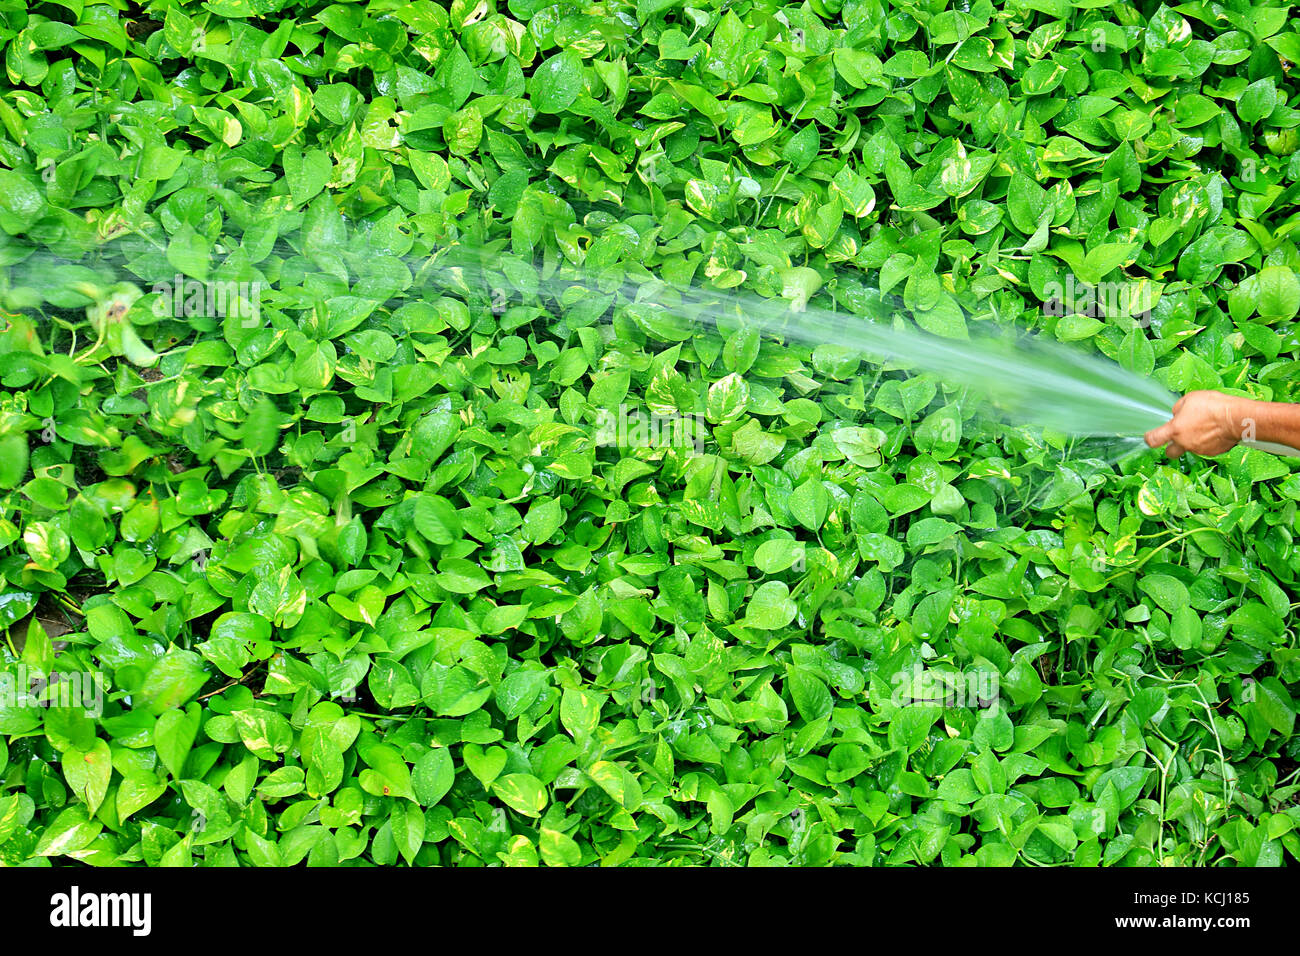 Gardener Watering Vibrant Green Devil's Ivy Plants with Spray Hose Pipe Stock Photo